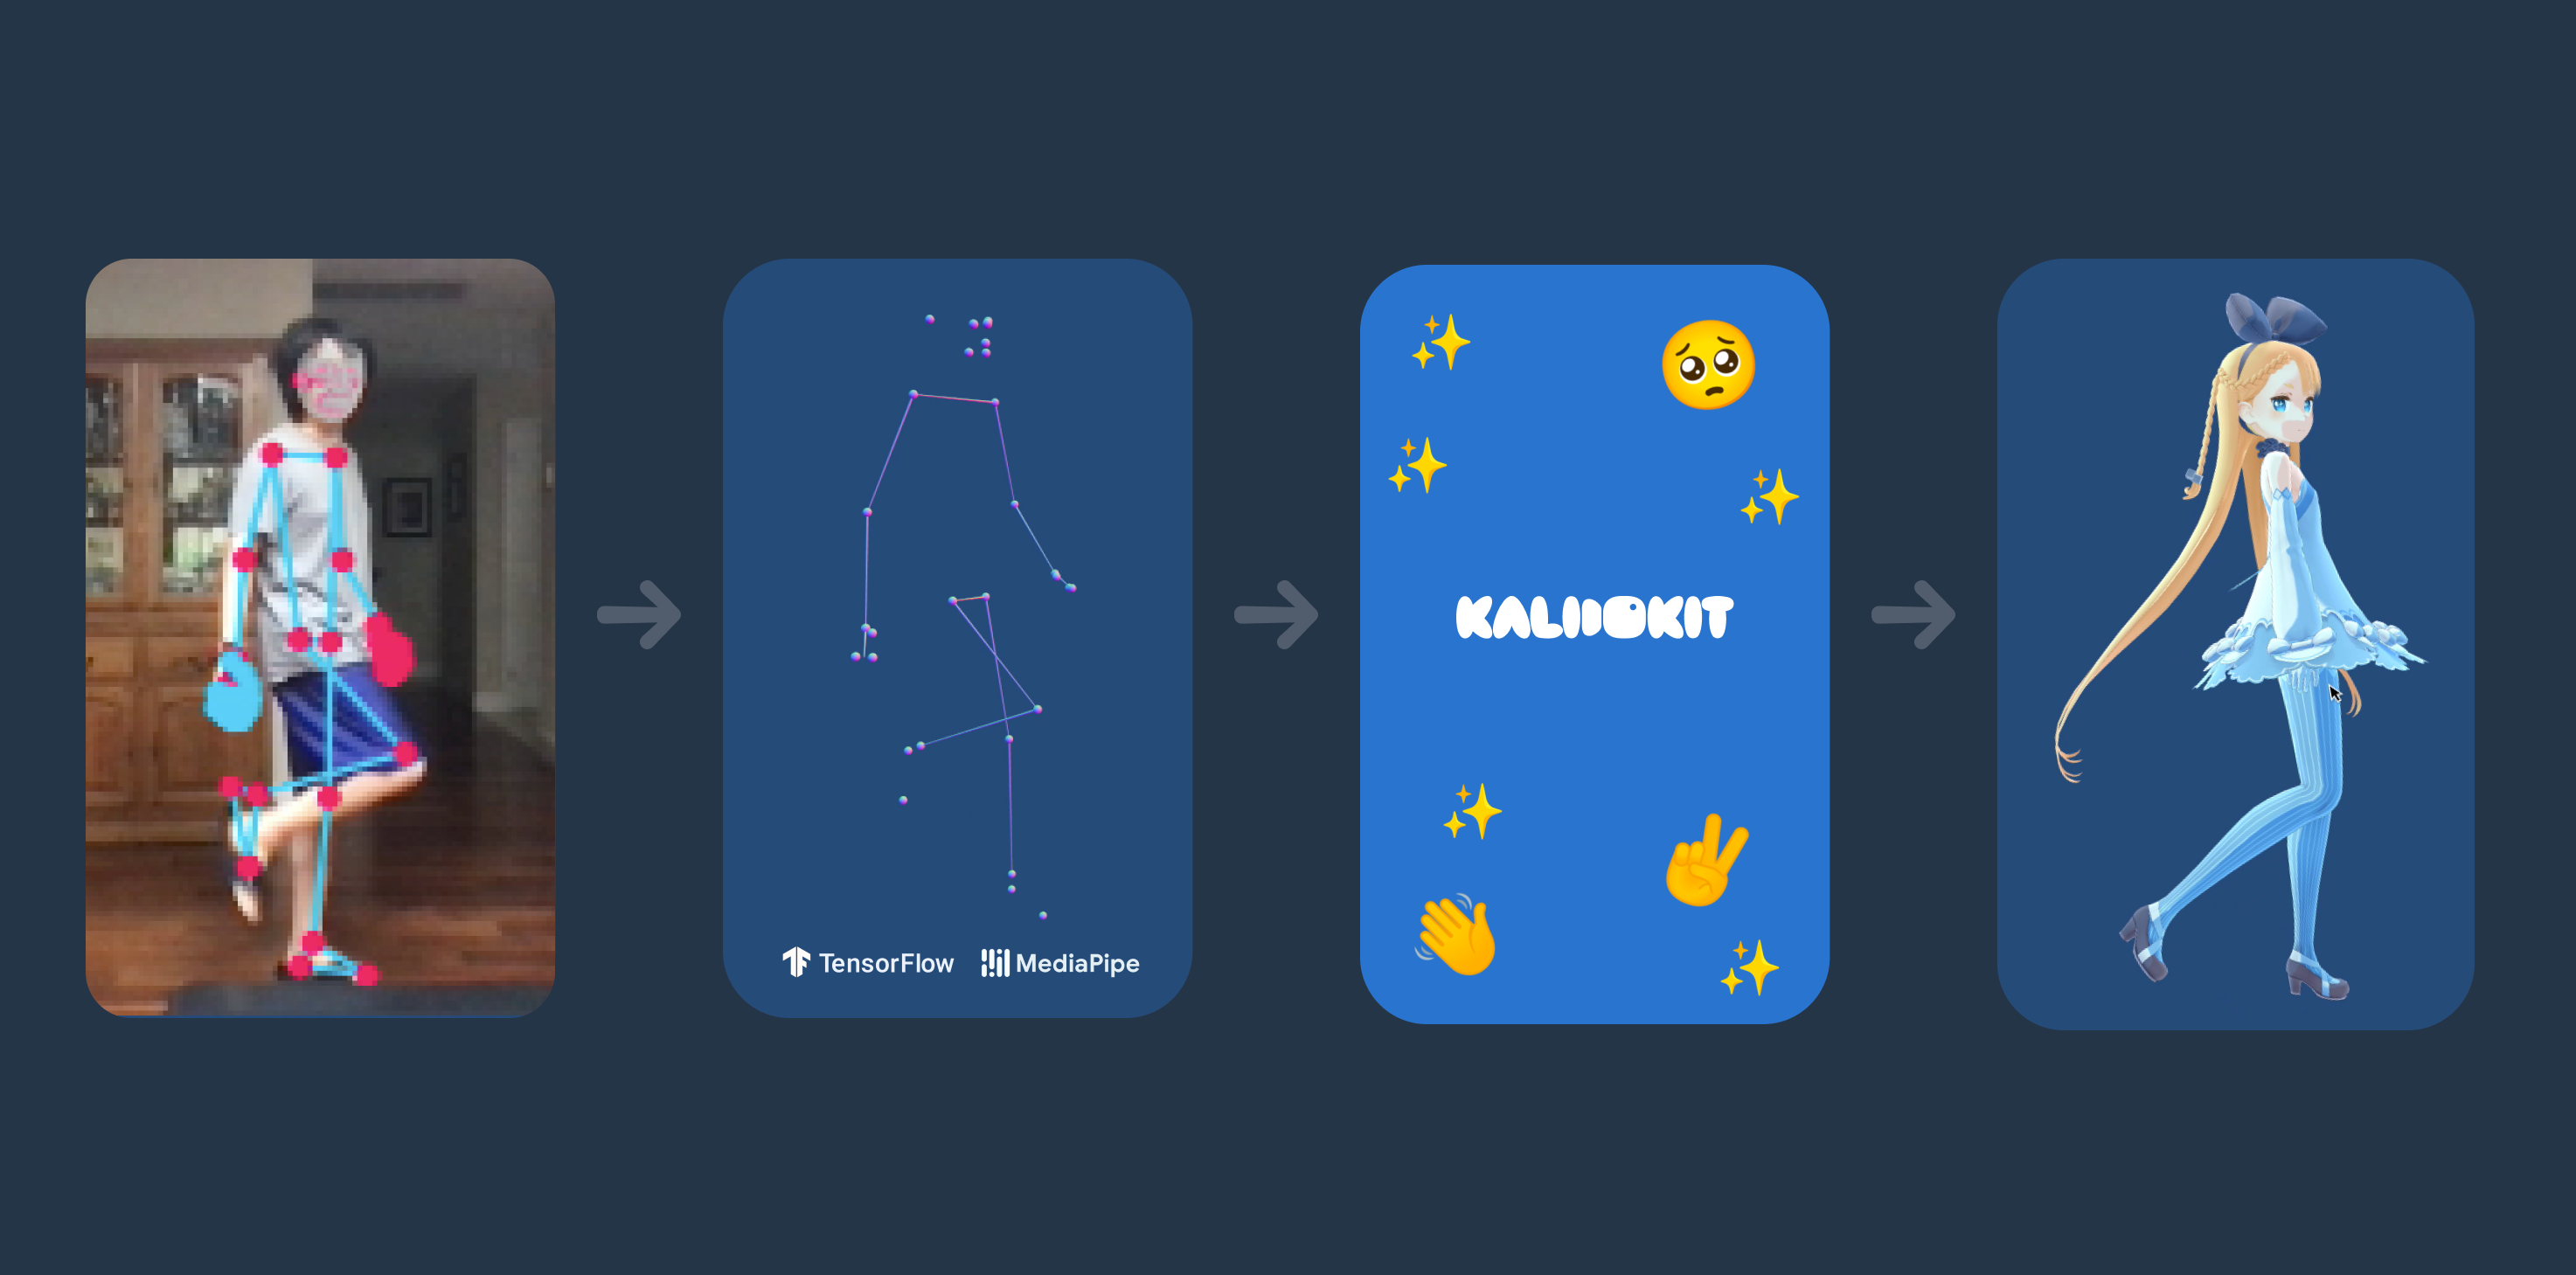 KalidoKit: algorithms to achieve, Facemesh, Blazepose, Handpose, Holistic